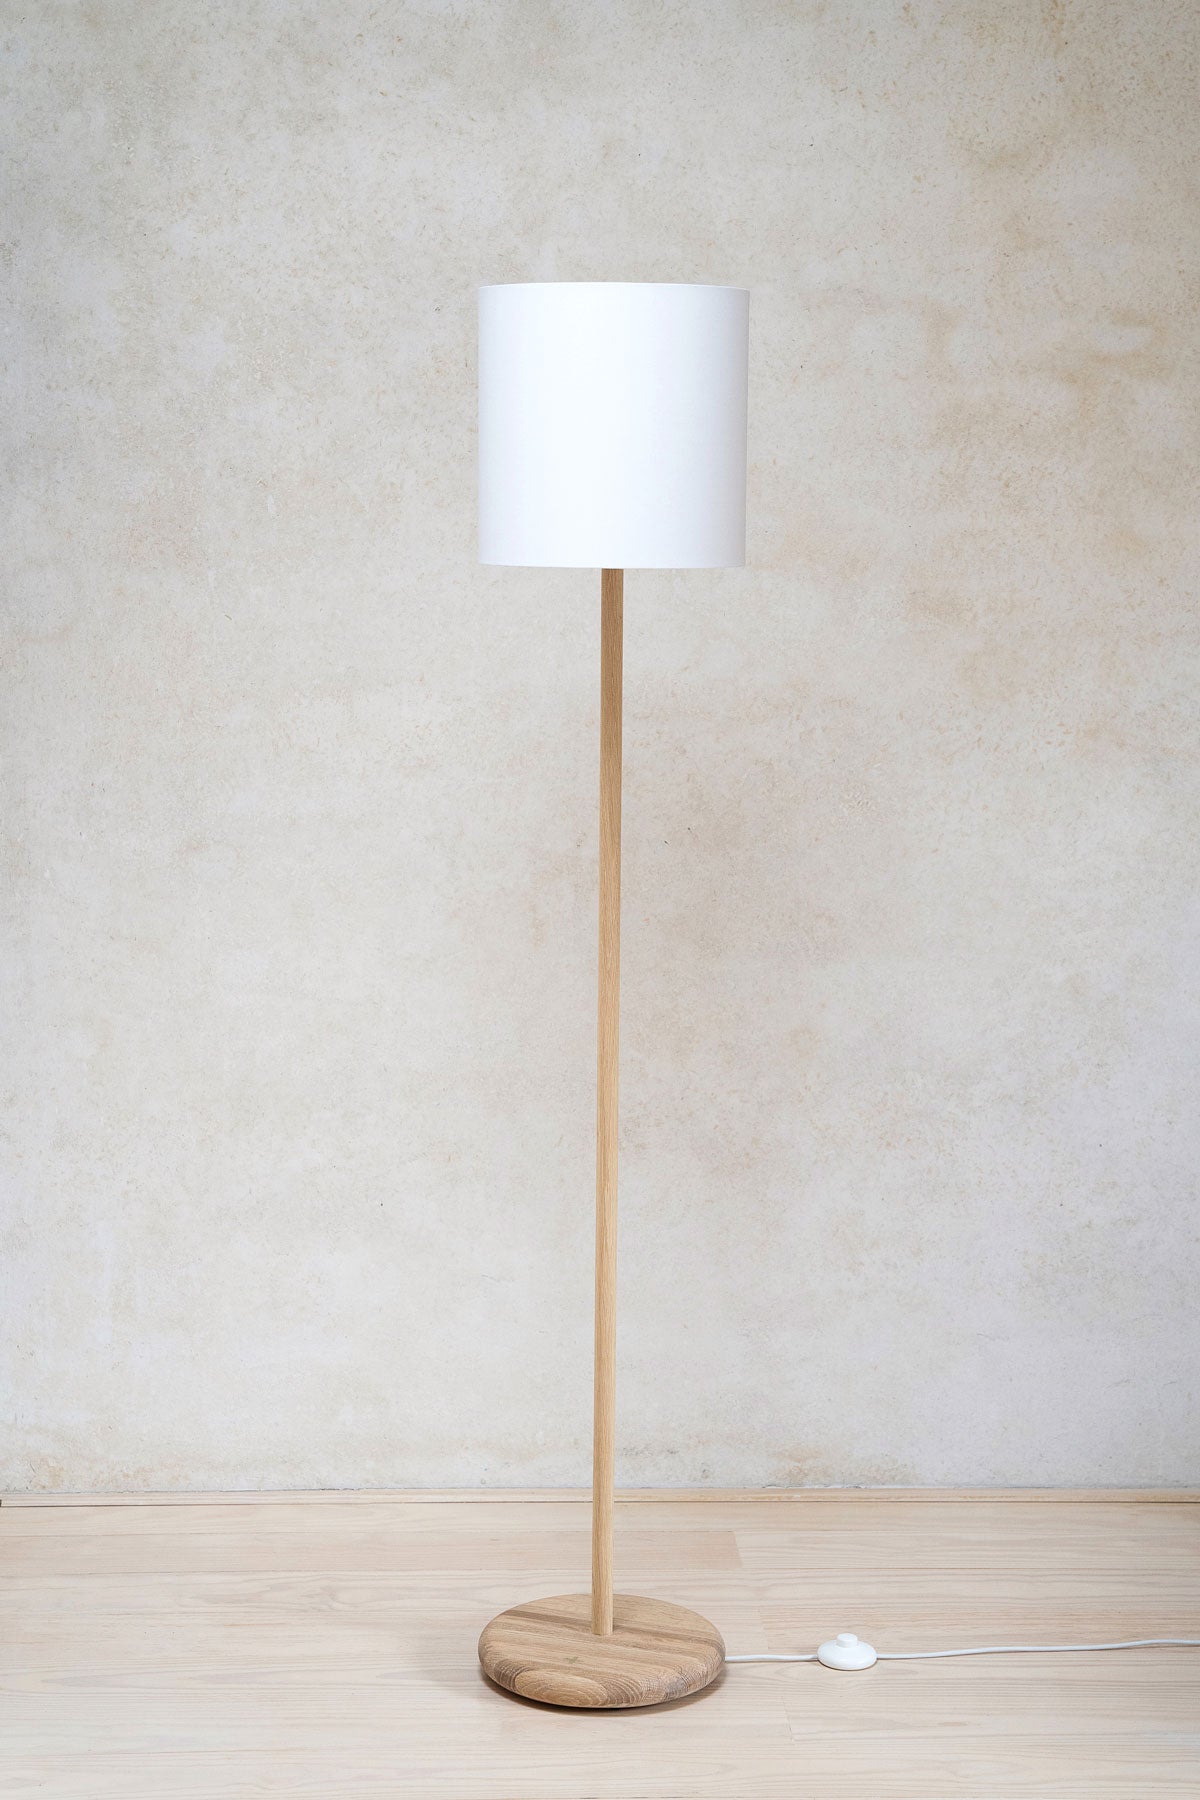 Strata timber standing lamp - Pedersen + Lennard